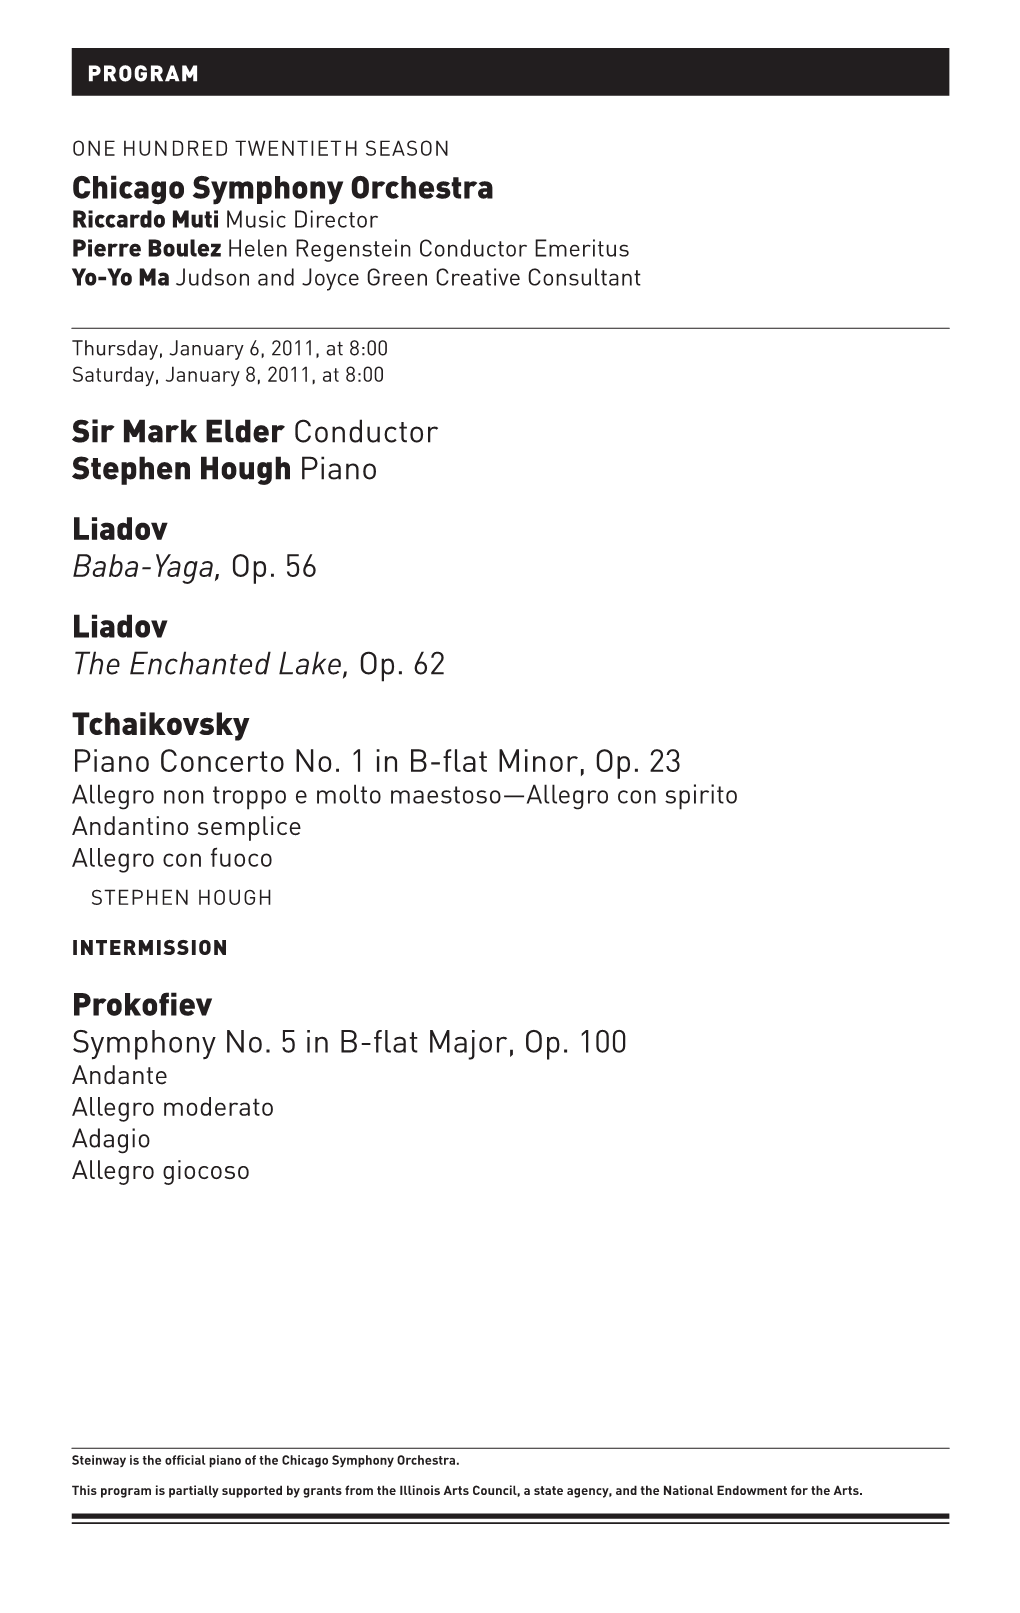 Sir Mark Elder Conductor Stephen Hough Piano Liadov Baba-Yaga, Op